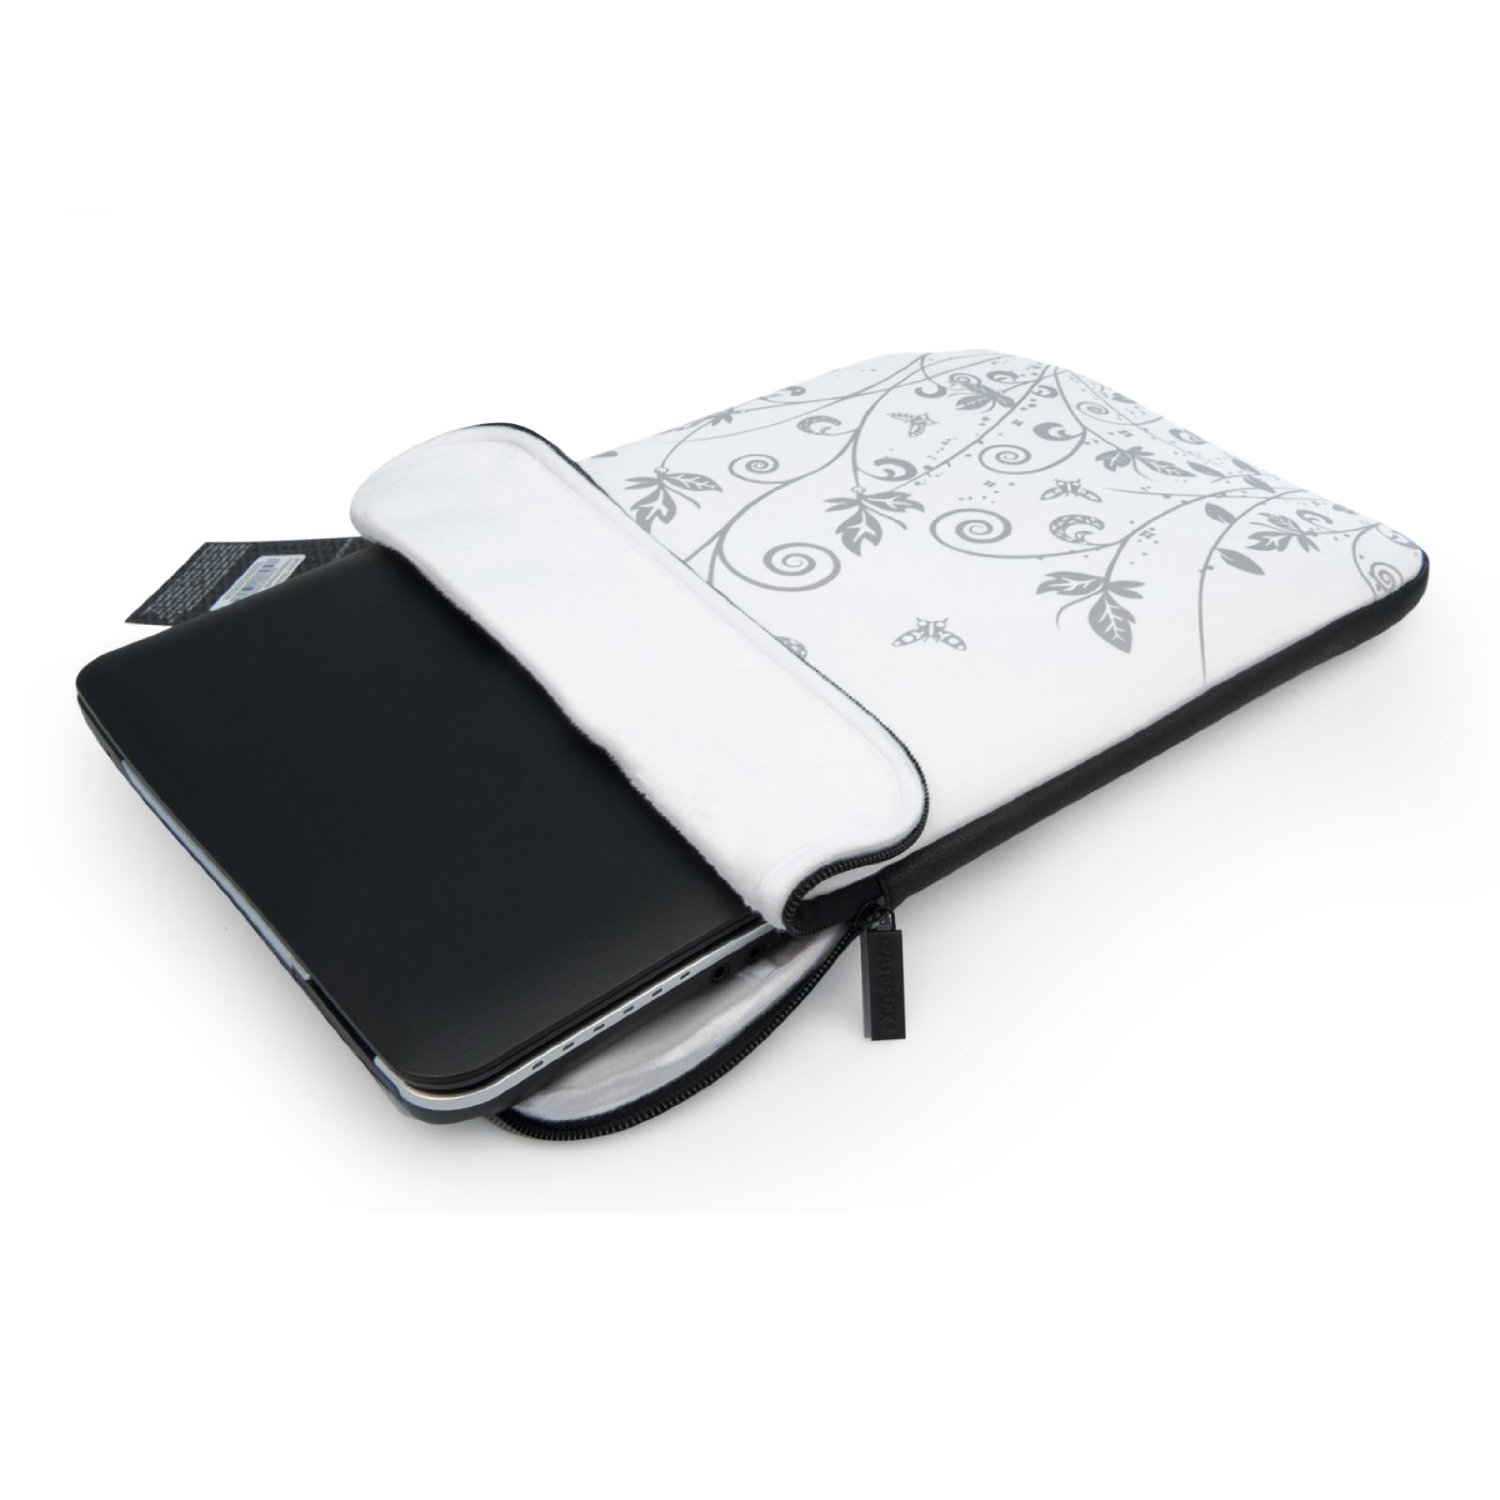 Caseflex 15.6 Inch  Laptop Case White / Silver Floral Butterfly Neoprene Sleeve Cover